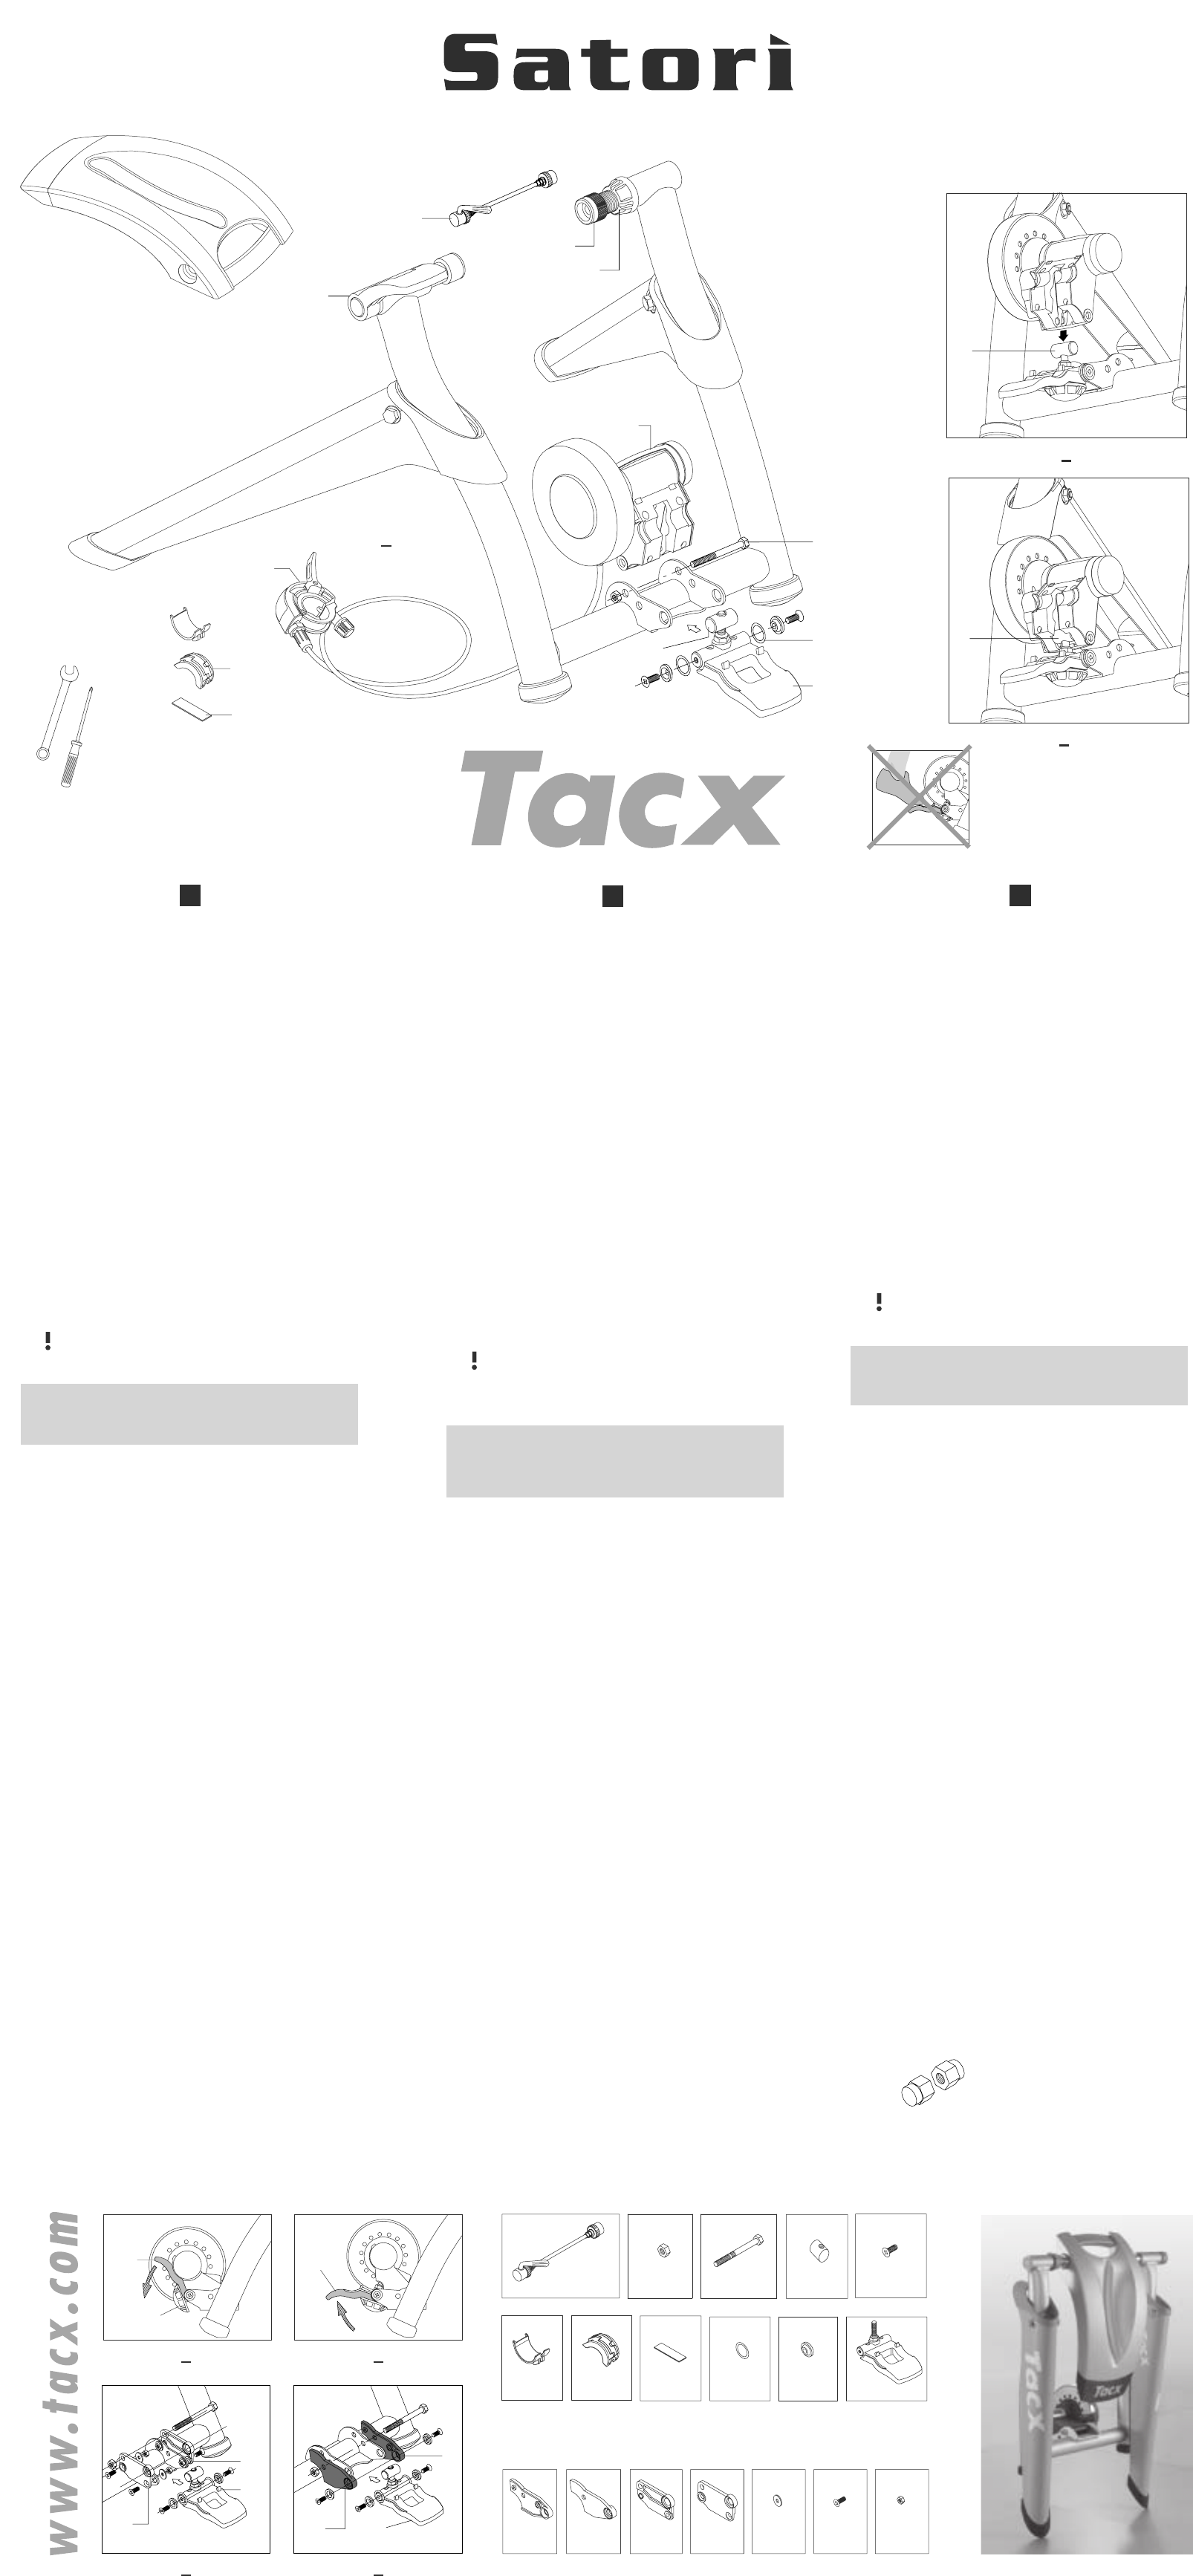 Tacx Satori (page of 2) (English, Dutch, French, Italian, Spanish)